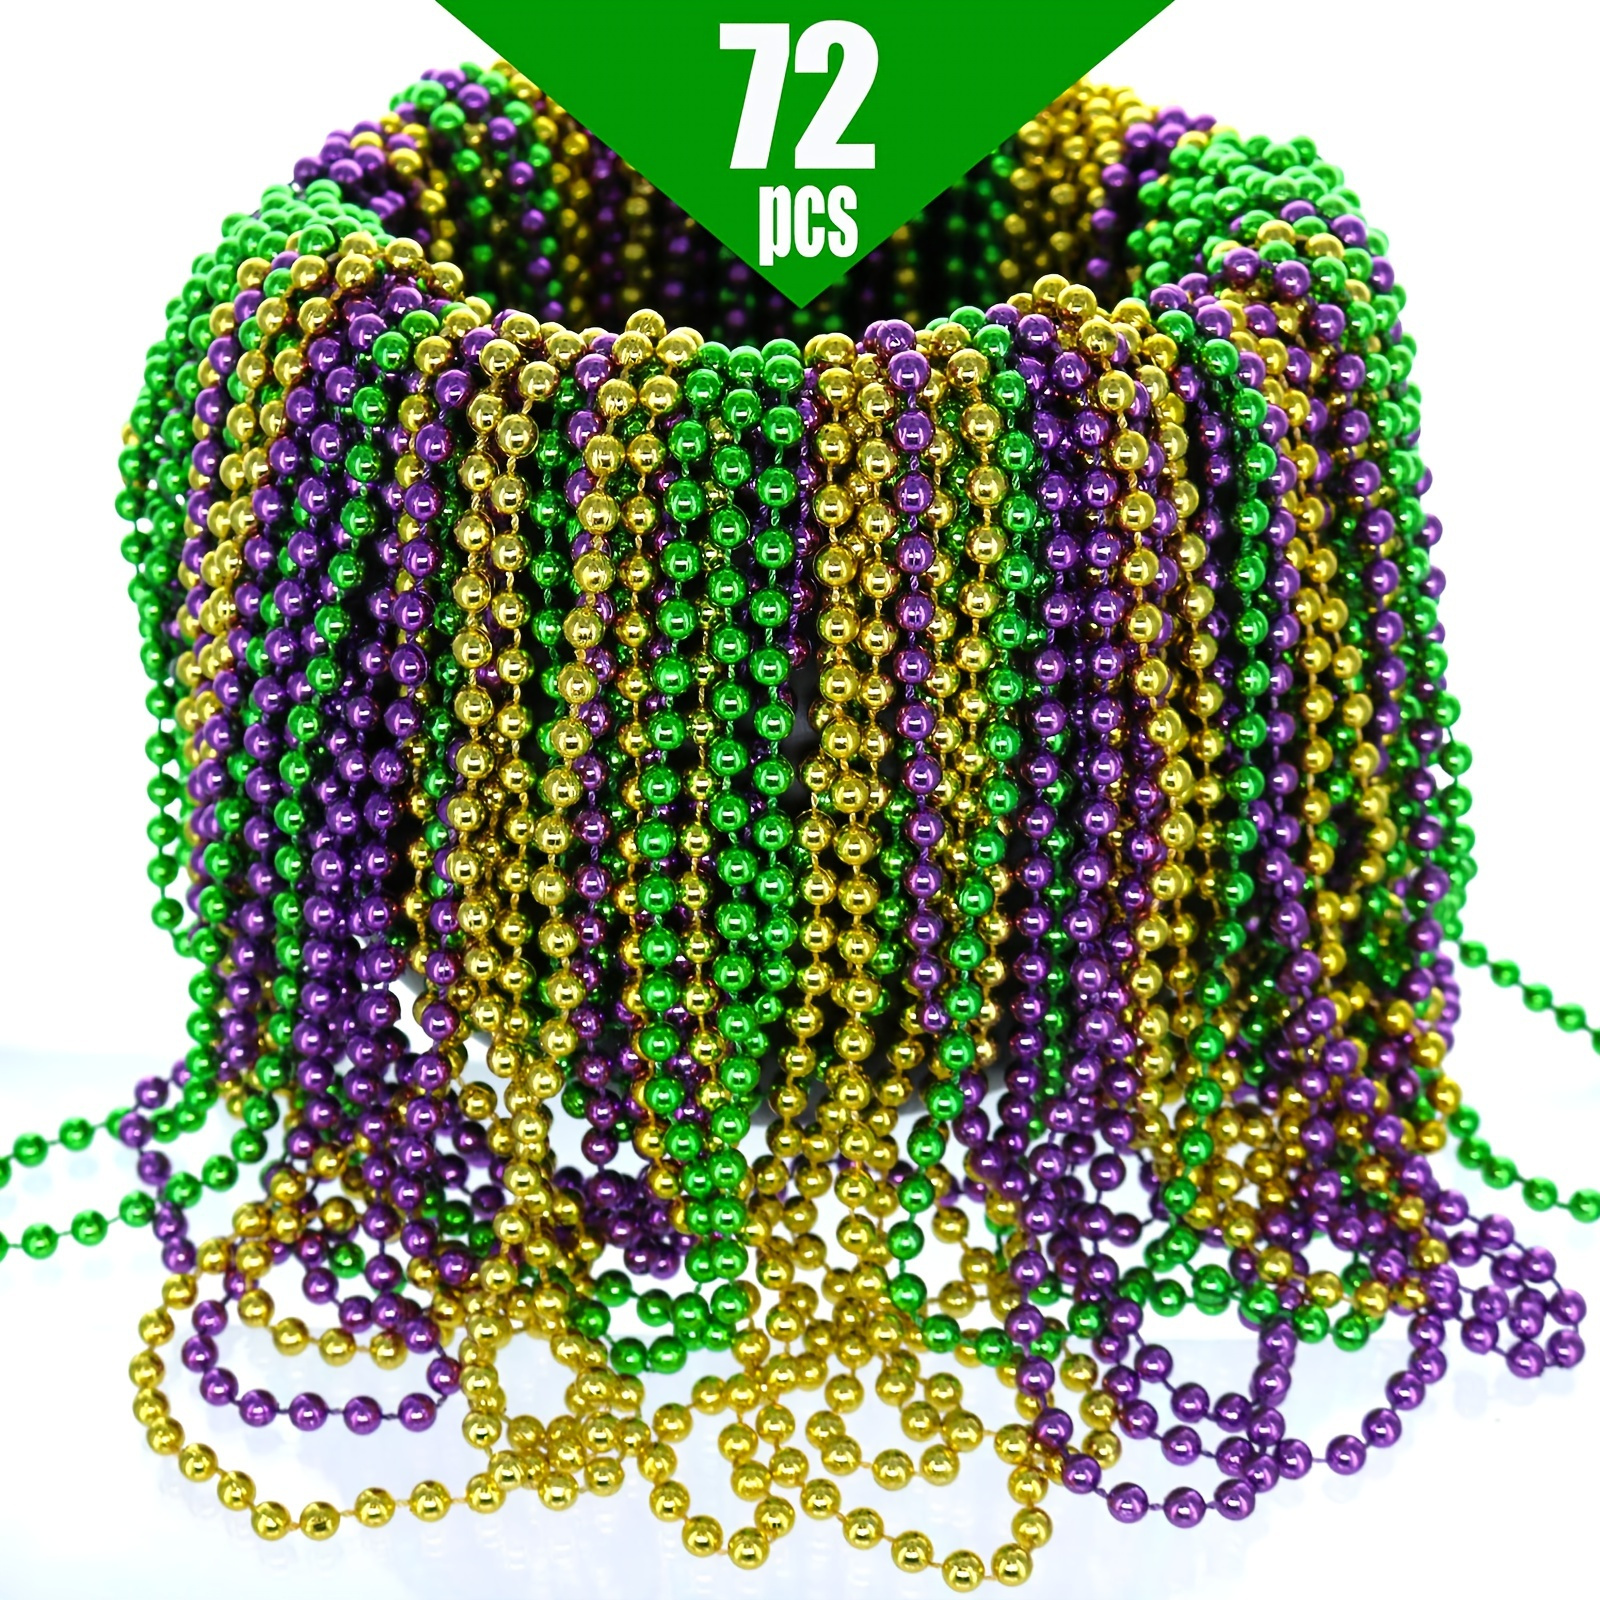 Bright Shiny Green Plastic Party Bead Necklace Mardi Gras St. Patrick's 32